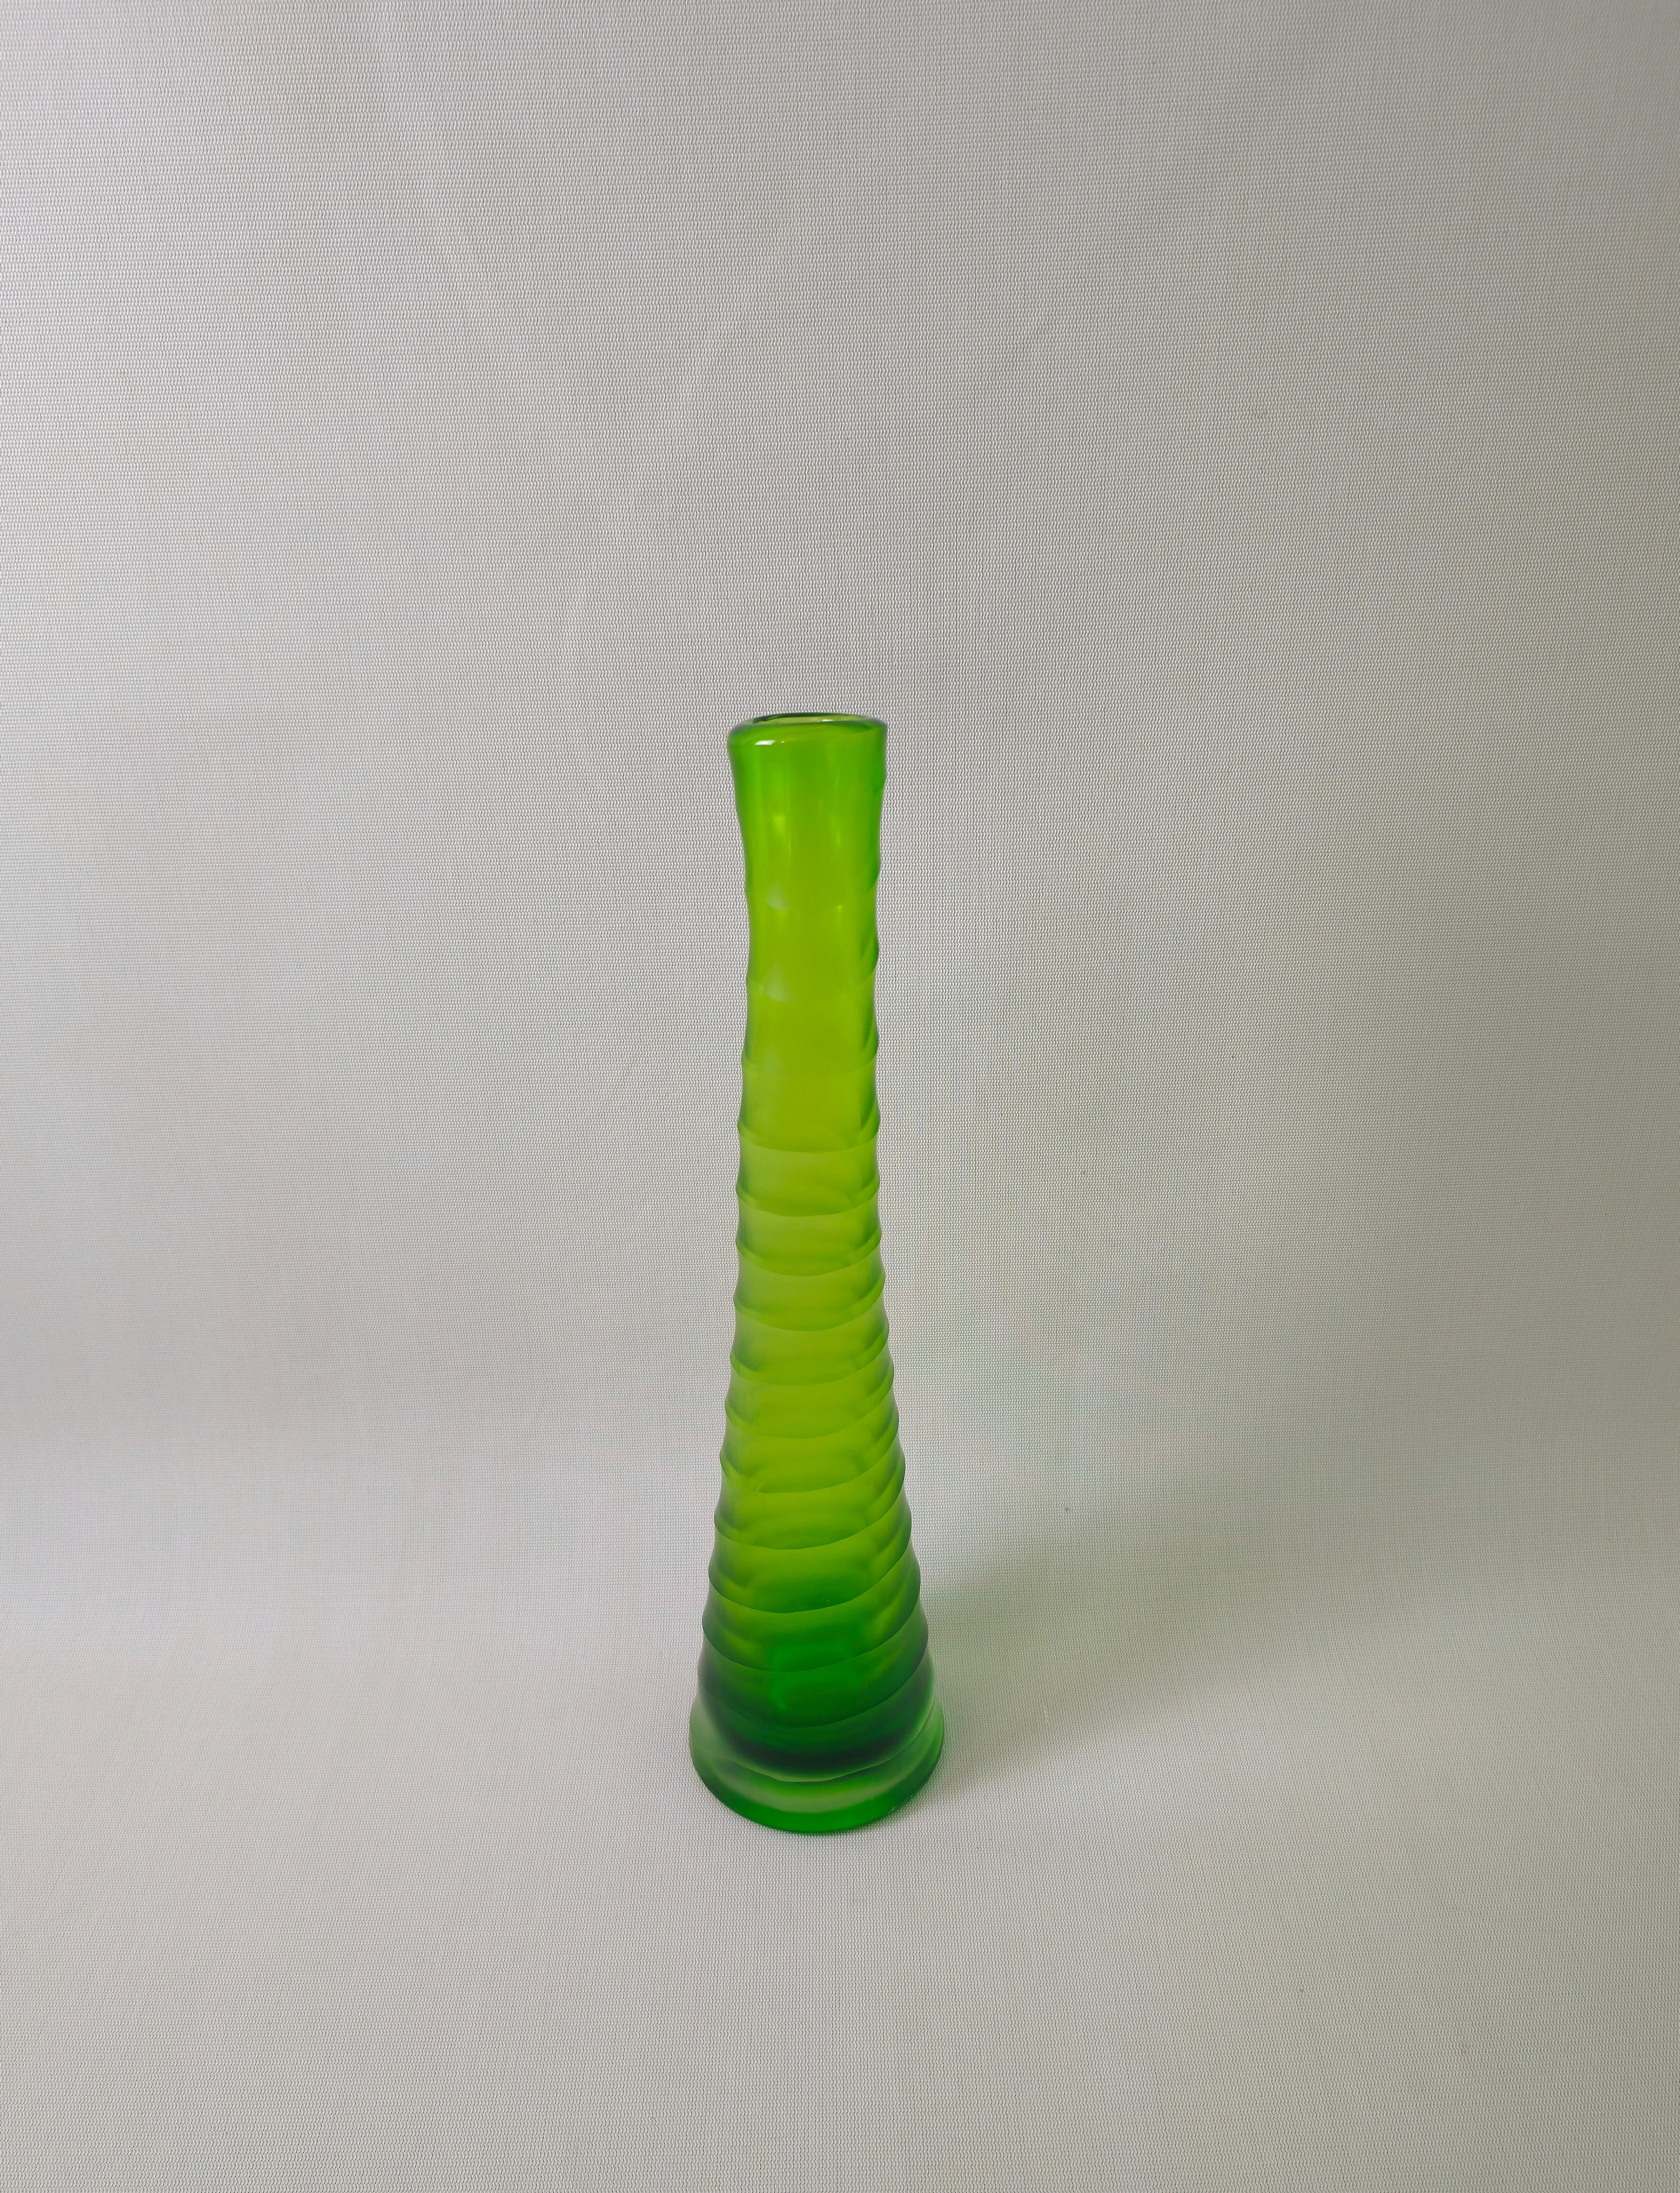 Vase Decorative Object Murano Glass Green Midcentury Modern Italian Design 1970s For Sale 3